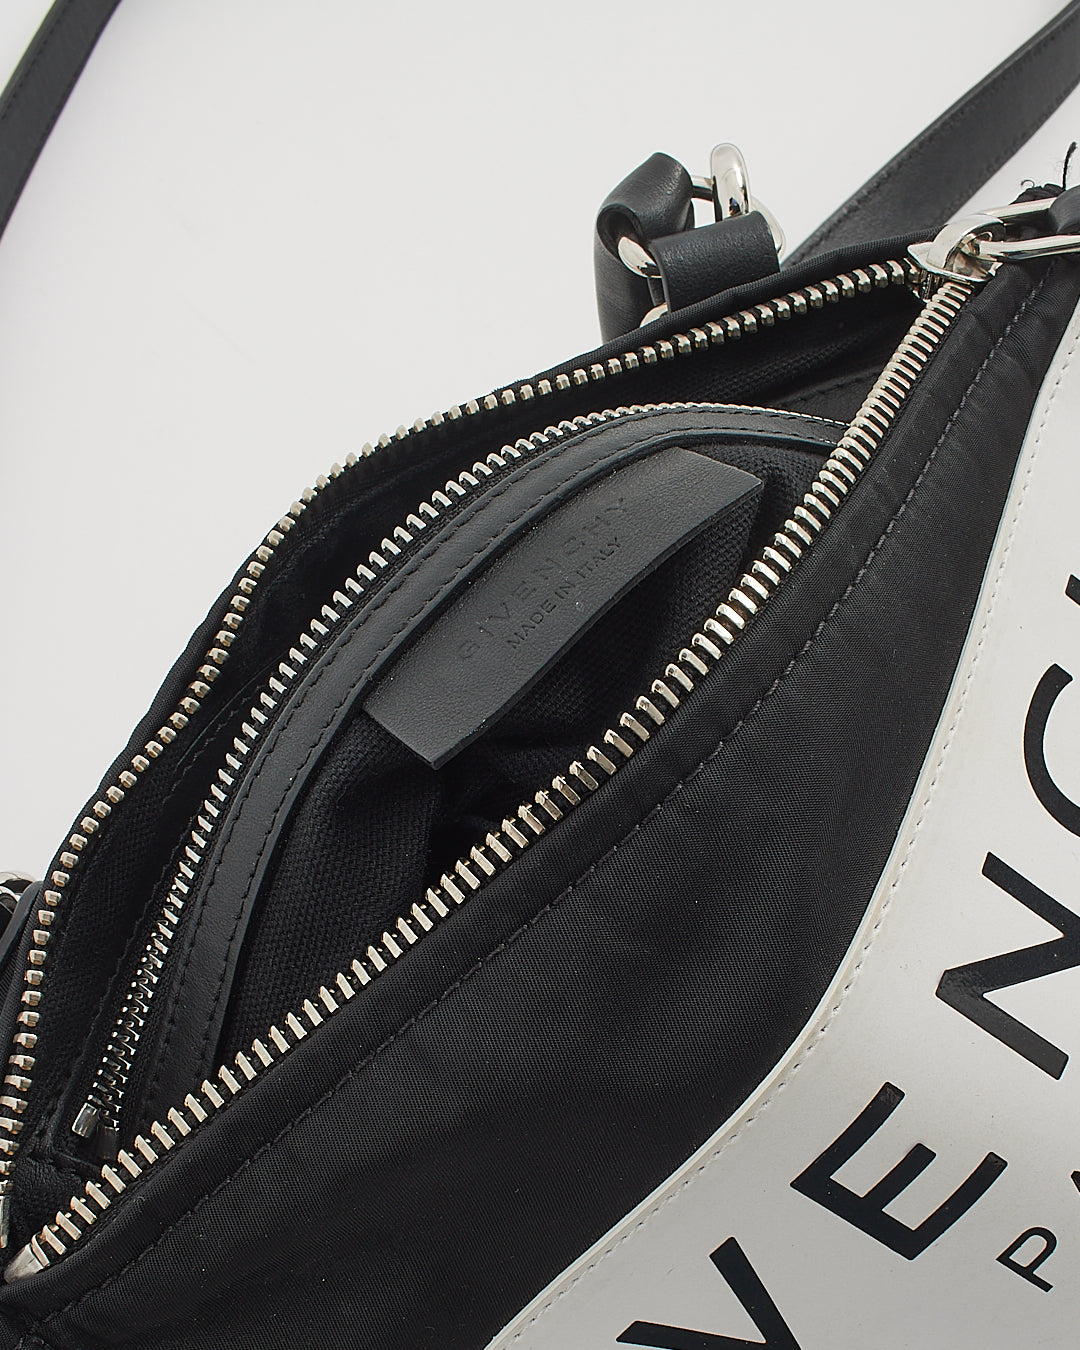 Givenchy Black/White Nylon Logo Pandora Crossbody Bag